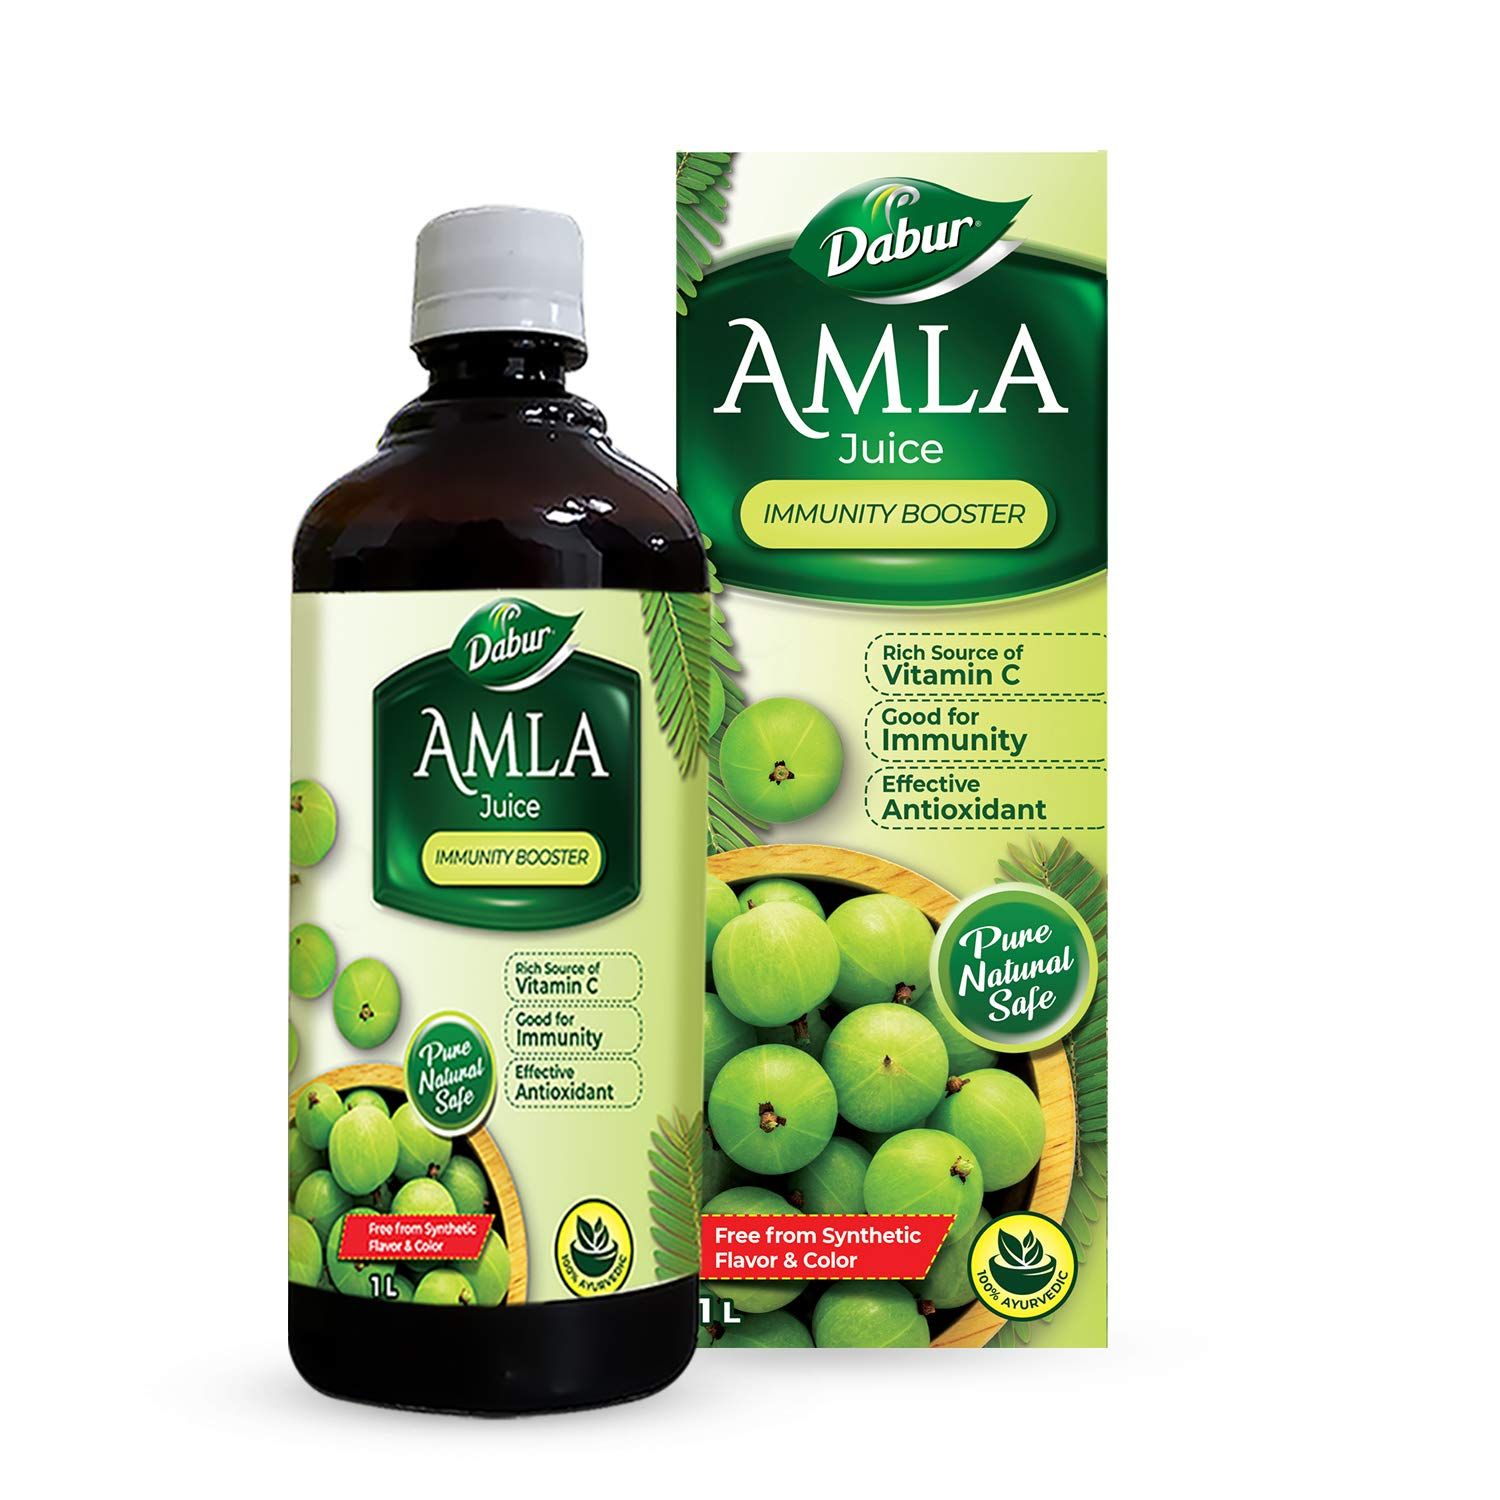 Dabur Amla Juice Image